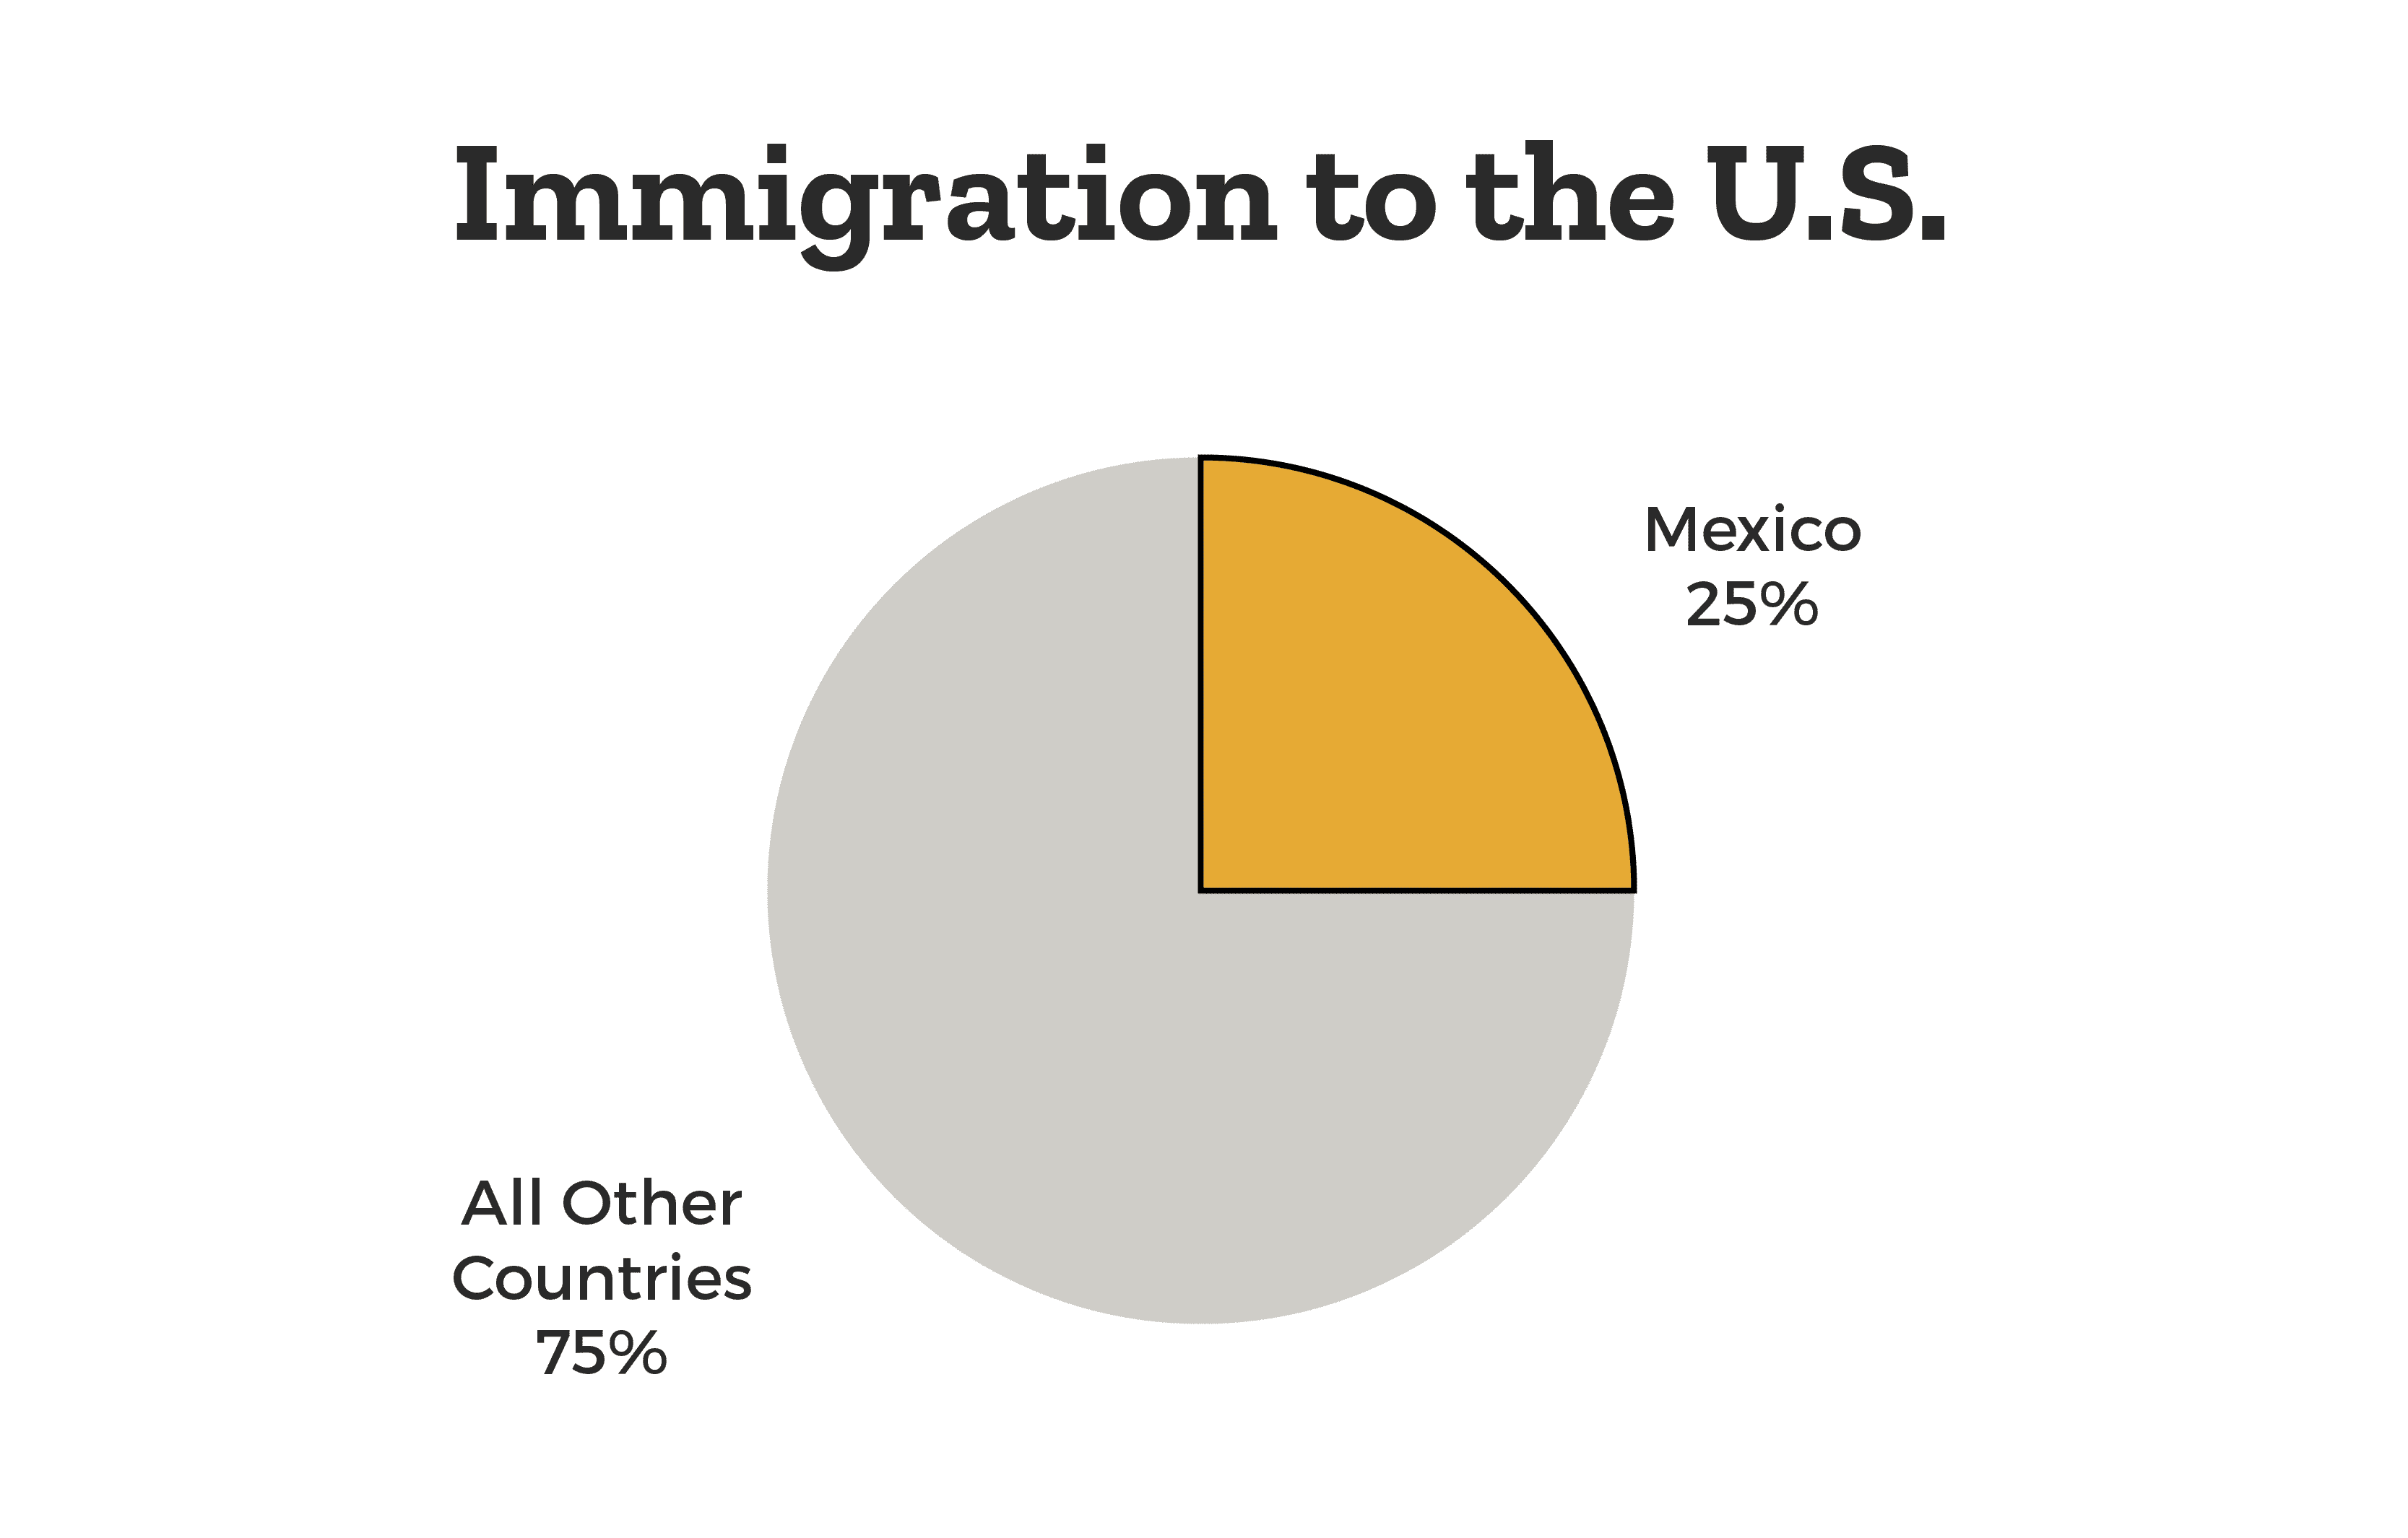 mexican-immigrants-25-percent-of-total-immigration